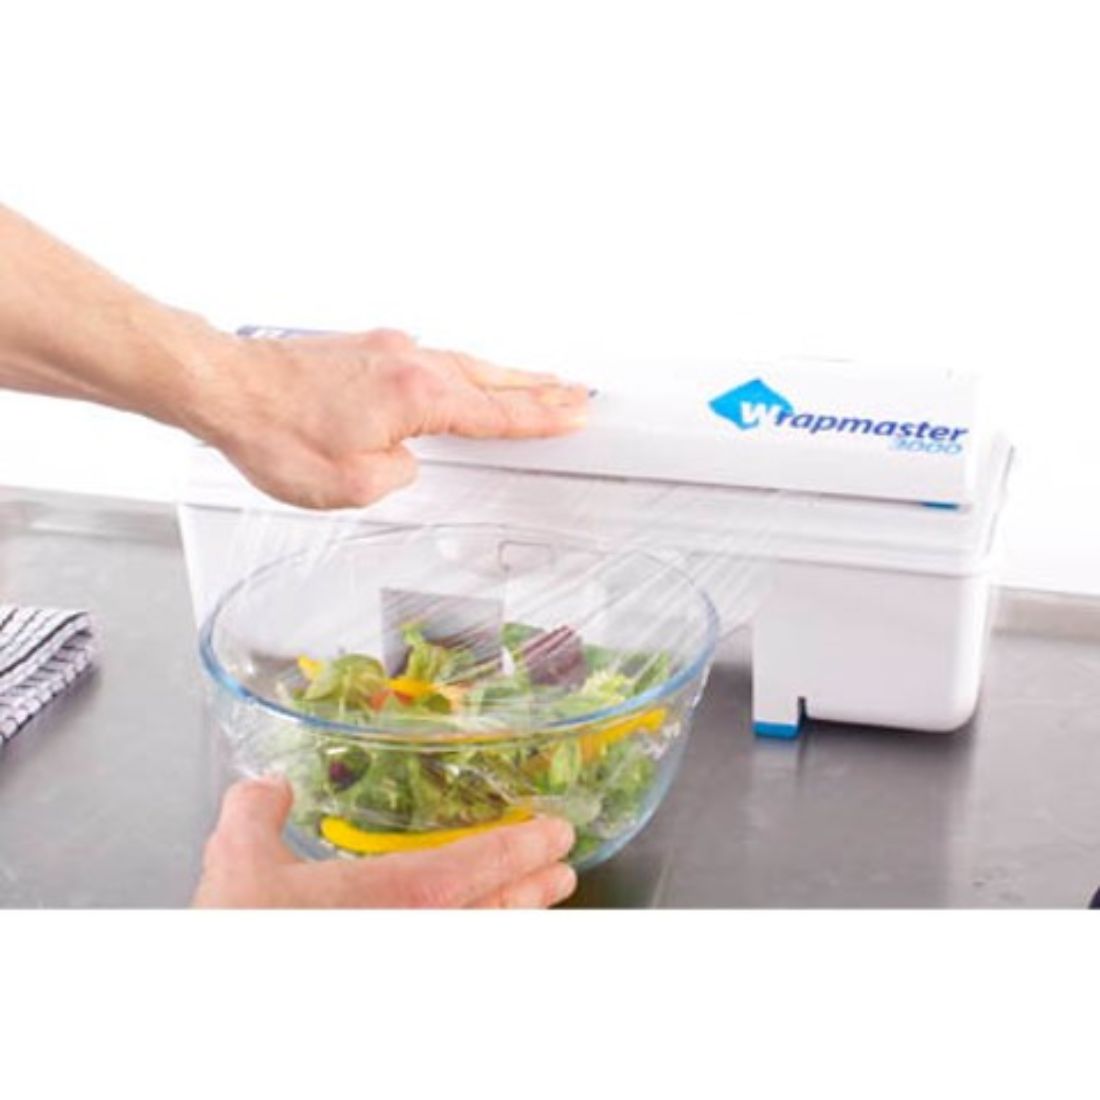 Wrapmaster 3000 Dispenser - dispenses 30cm wide film or foil - Caterclean  Supplies